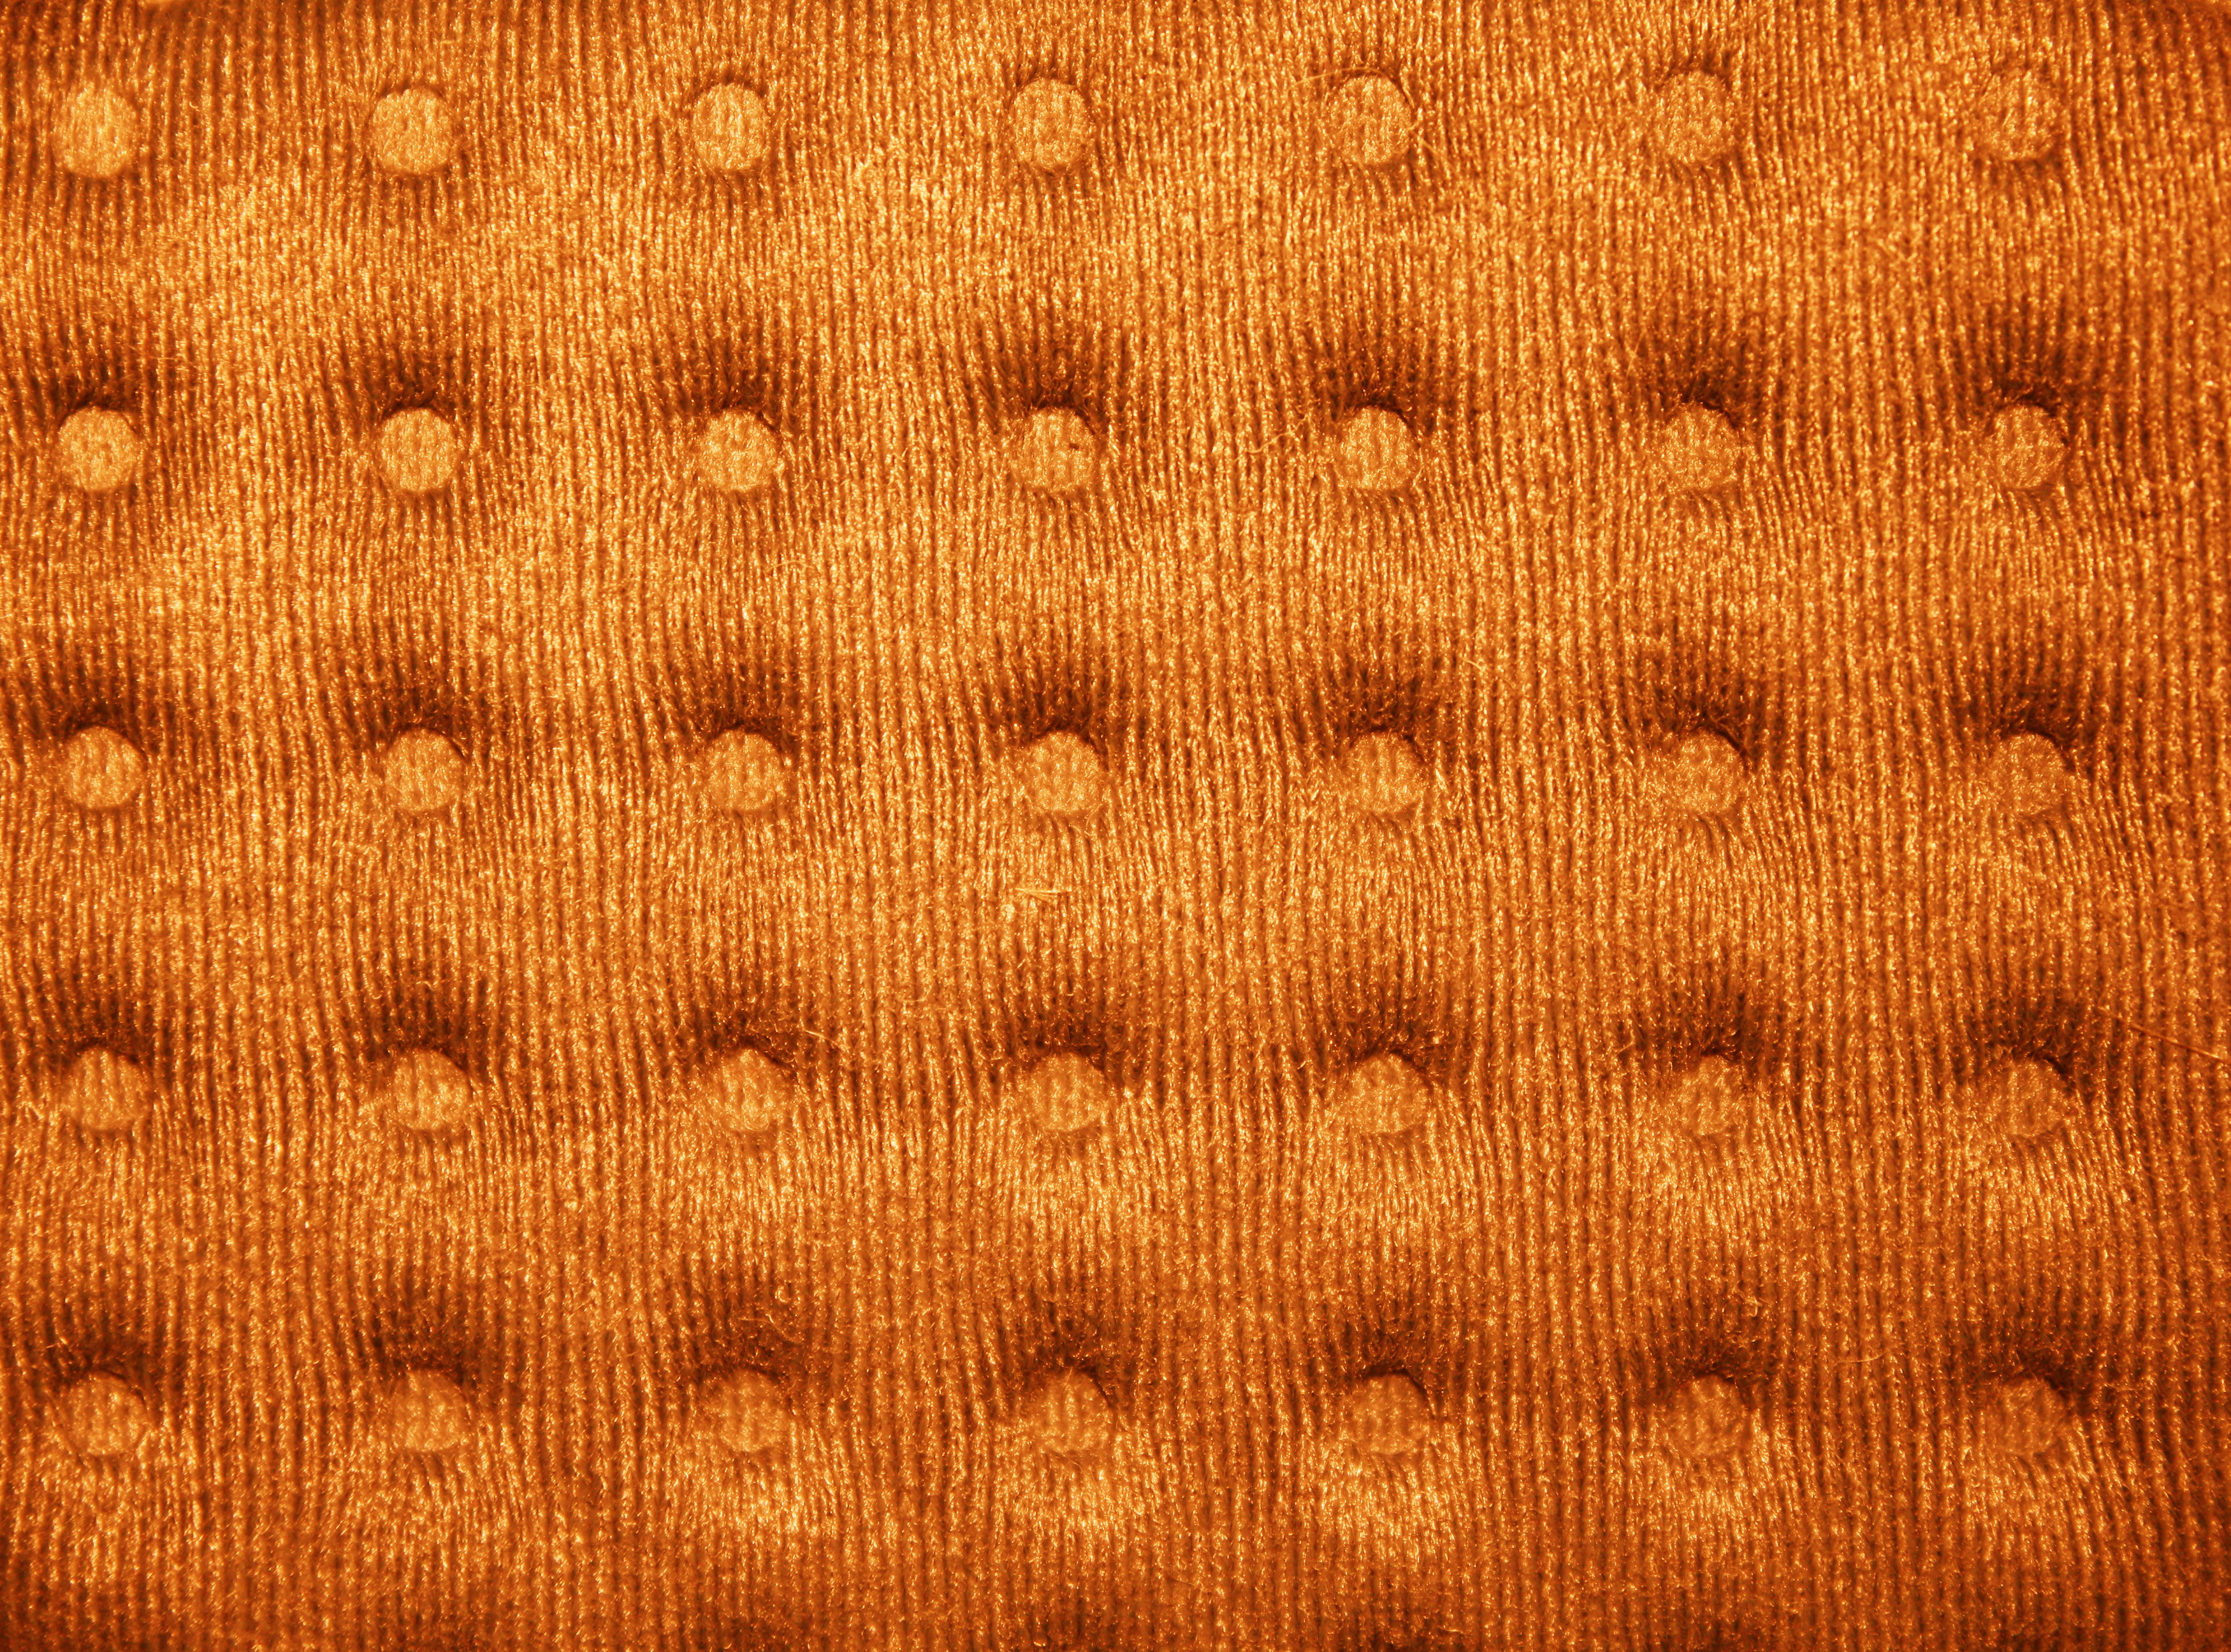 Orange Tufted Fabric Texture Picture Free Photograph Photos Public Domain